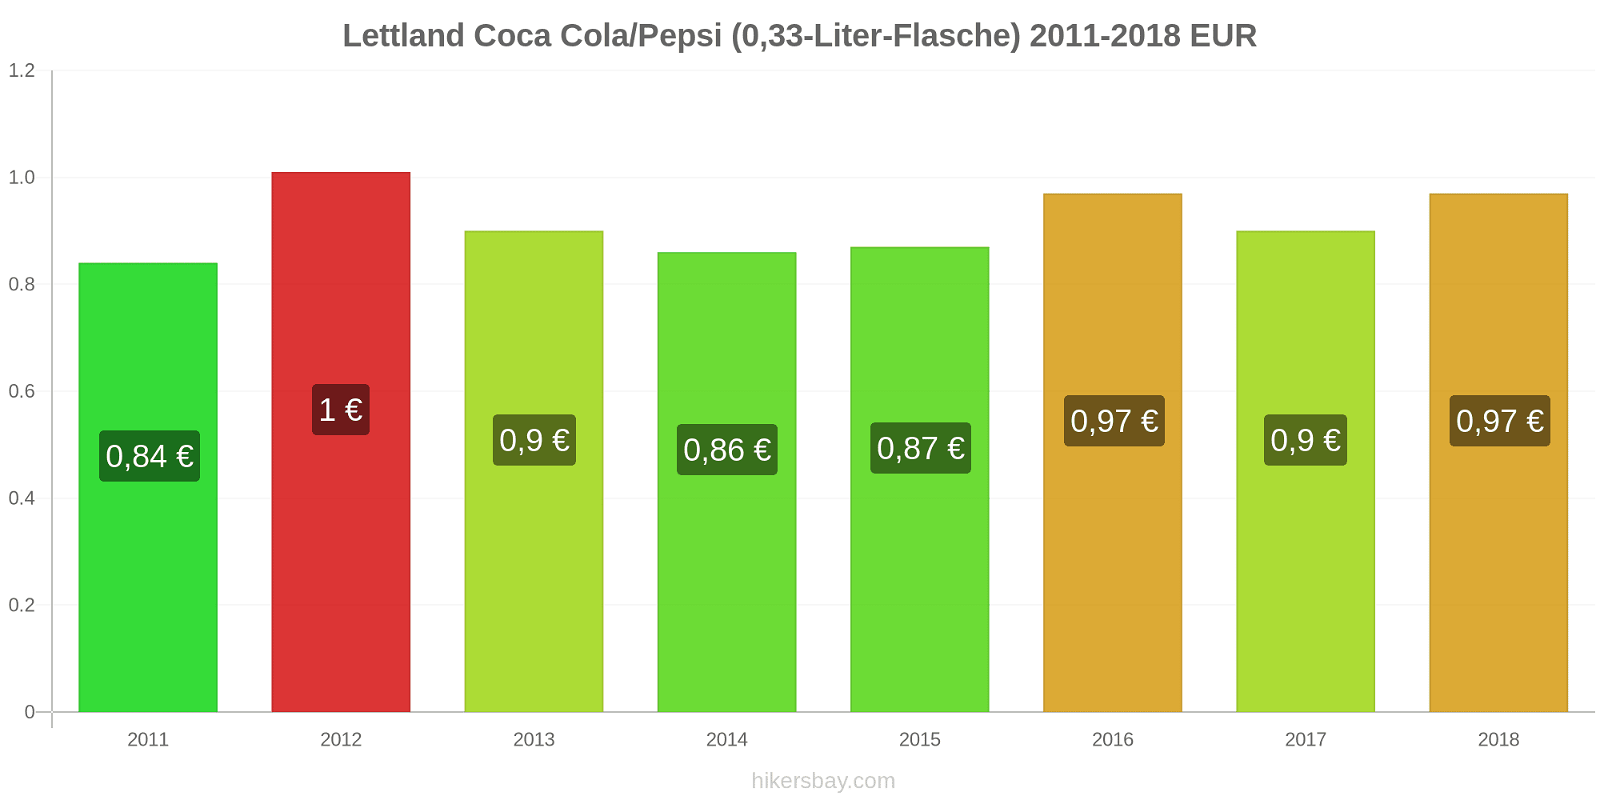 Lettland Preisänderungen Coke/Pepsi (0,33-Liter-Flasche) hikersbay.com